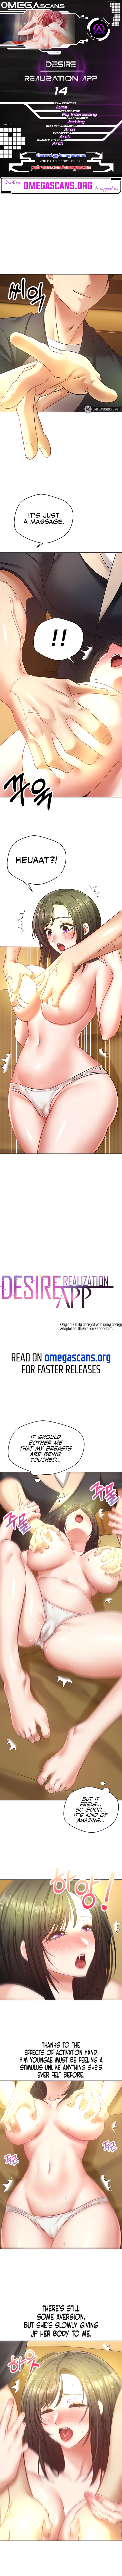 Desire Realization App image